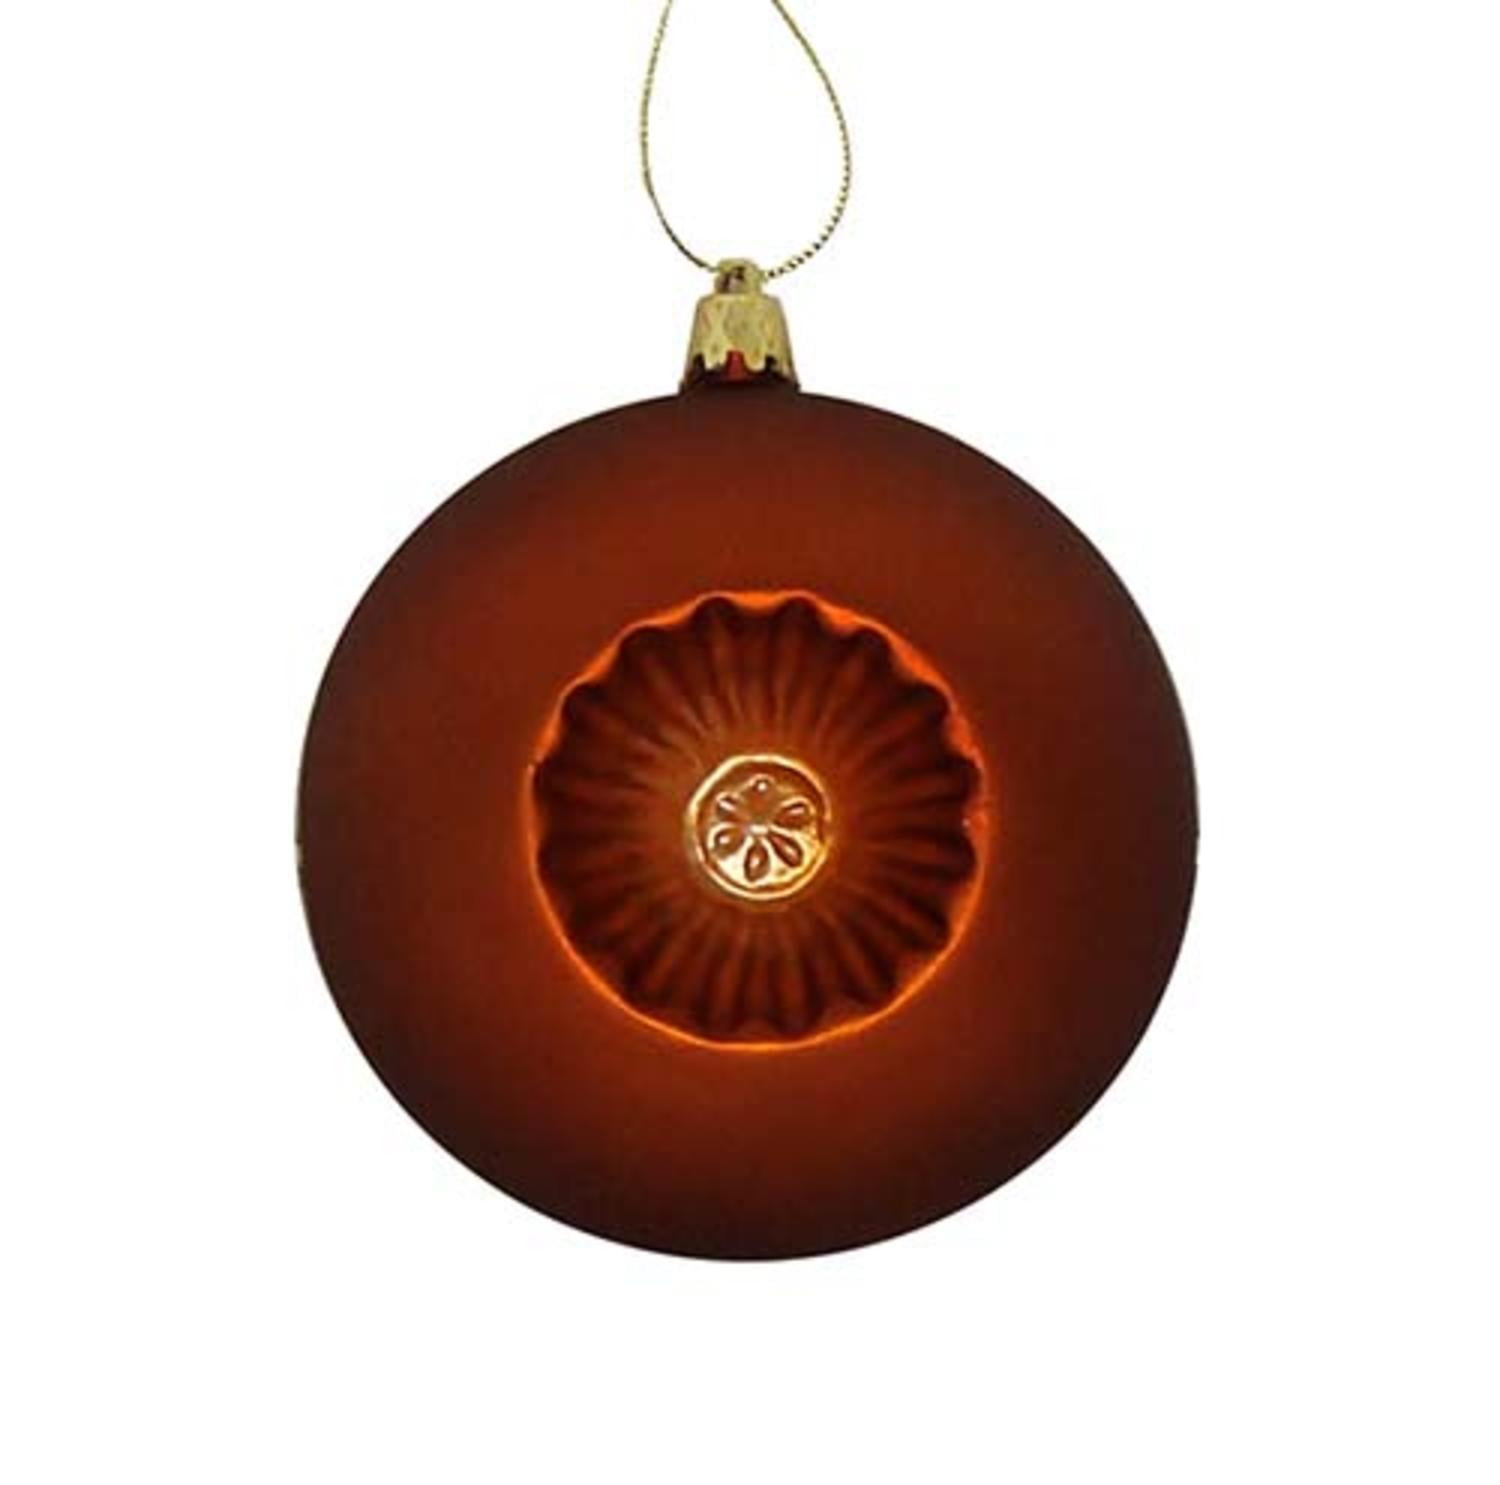  YETTASBIN Orange Solid Color Large Christmas Ornament